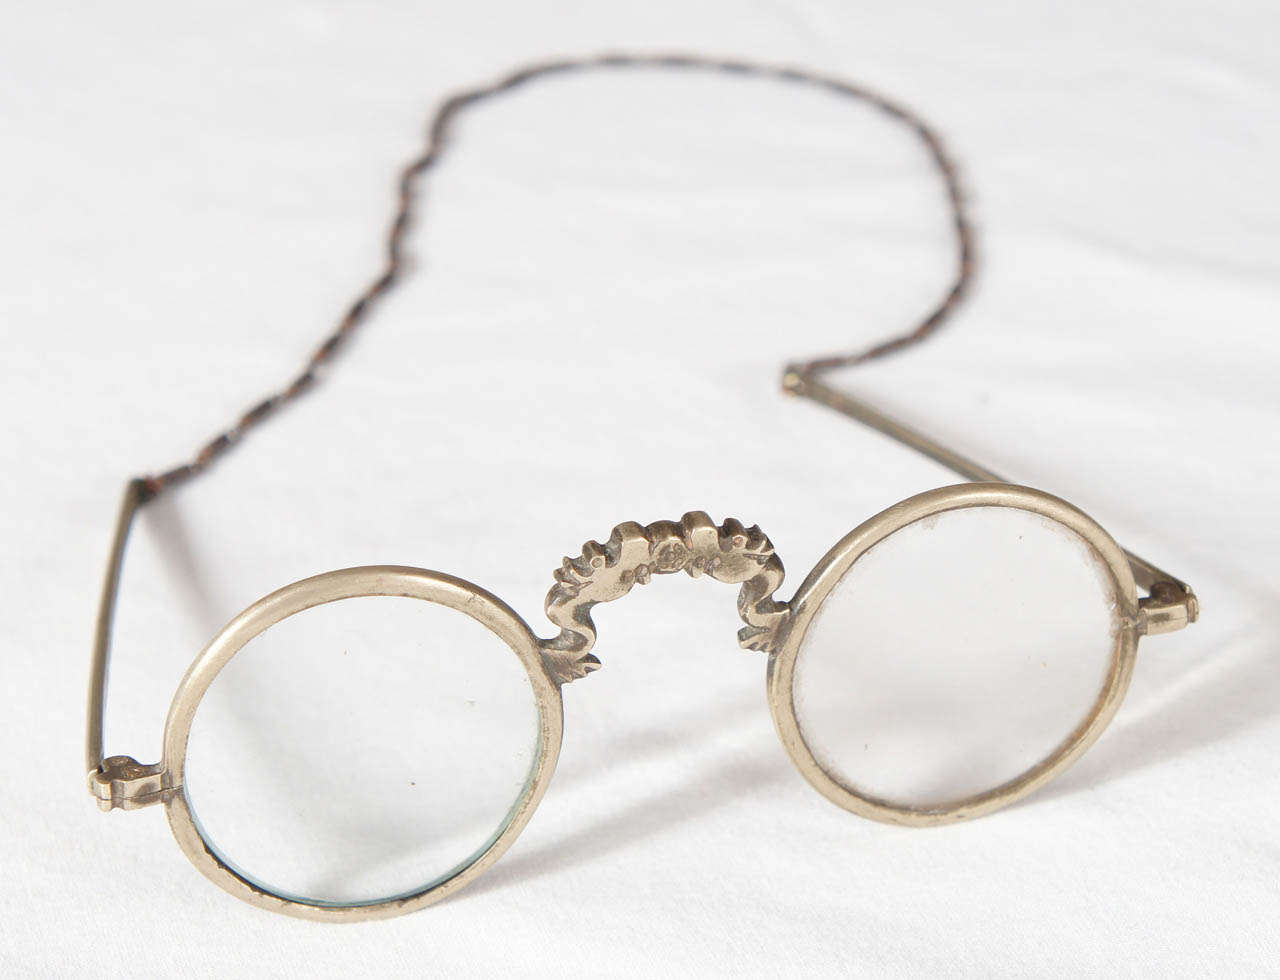 19th century eyeglasses